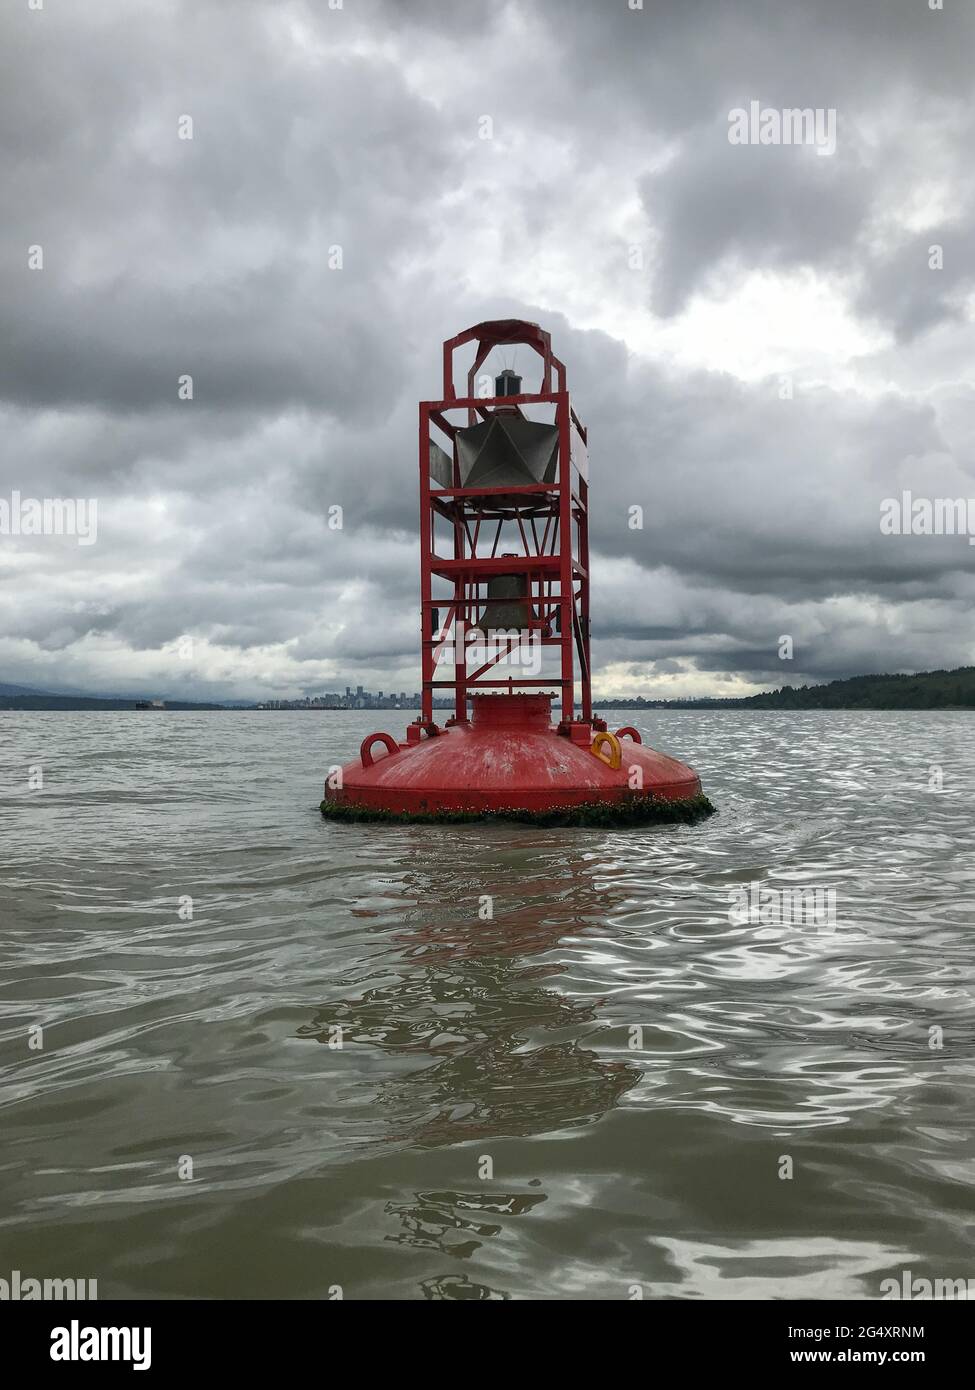 Rote Glockenboje-Kanalmarkierung nahe der Küste im Ozean Stockfoto